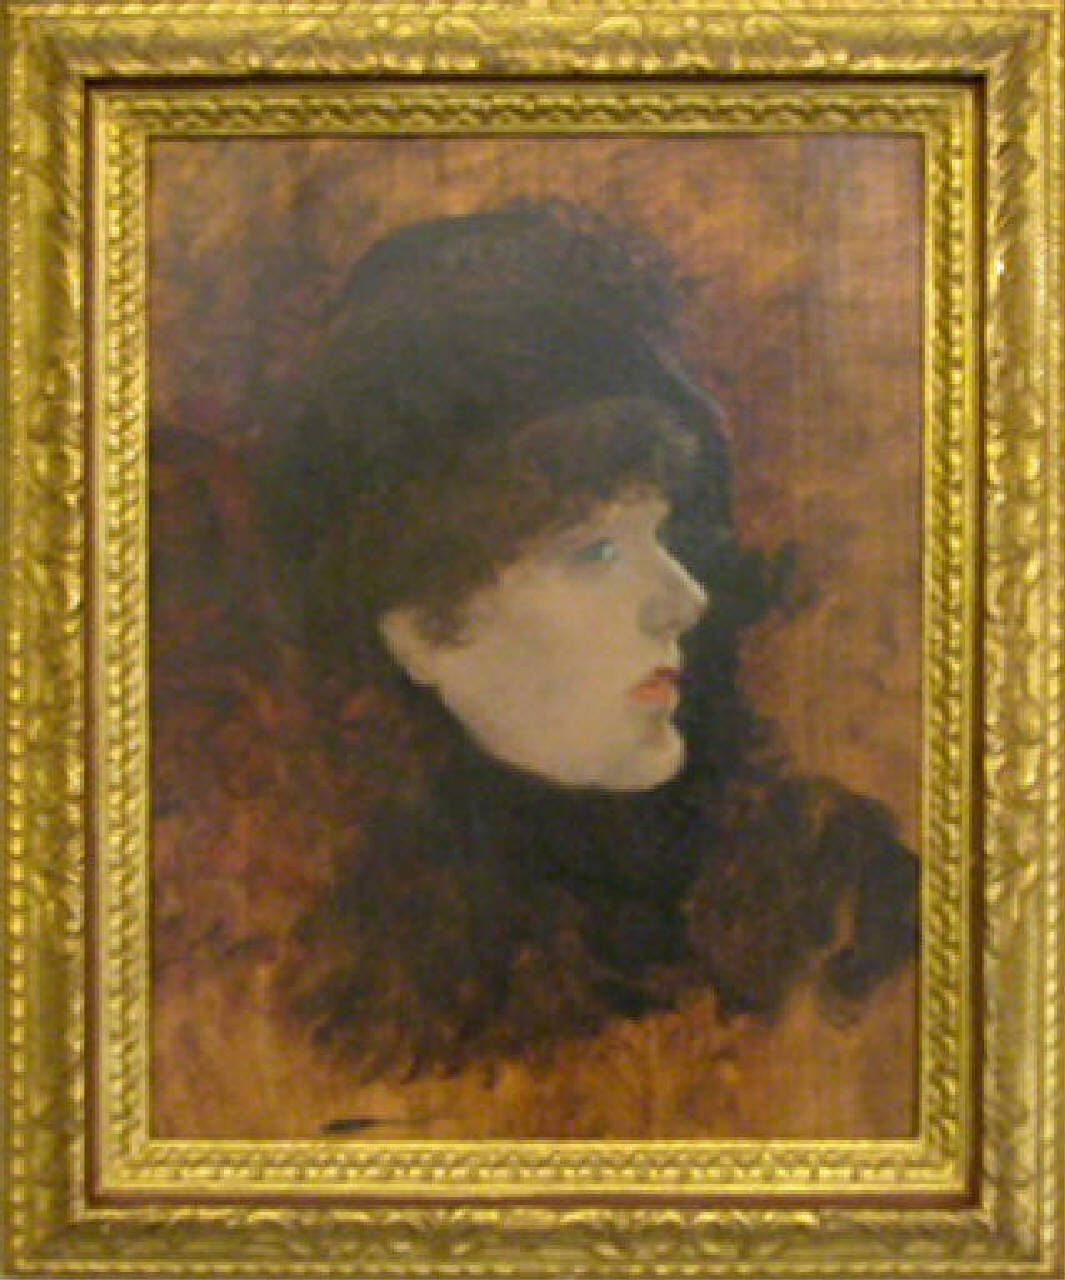 Sarah Bernhardt (?), ritratto femminile/ sarah bernhard attrice (dipinto) di De Nittis Giuseppe (seconda metà sec. XIX)